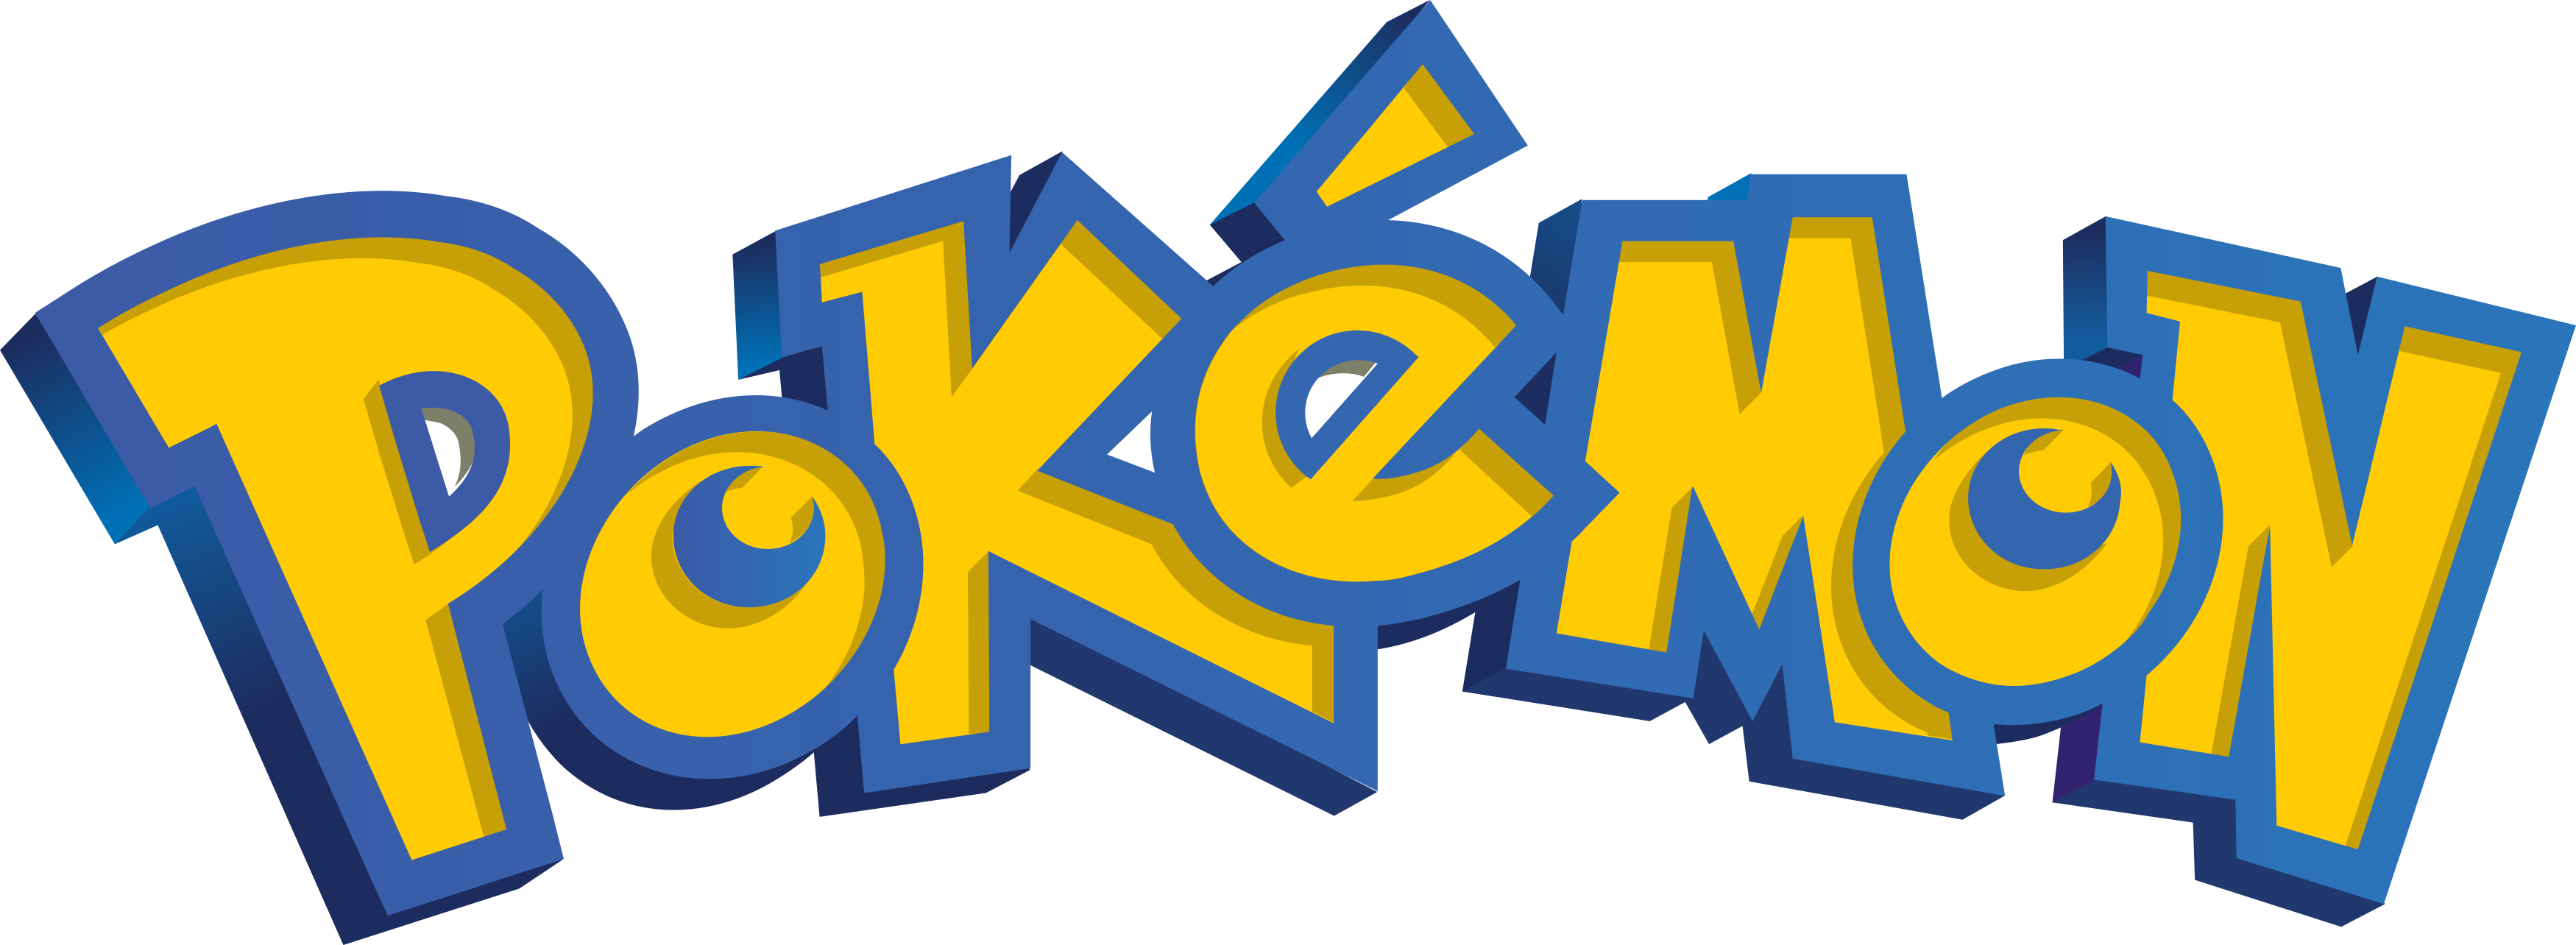 Logo do pokemon